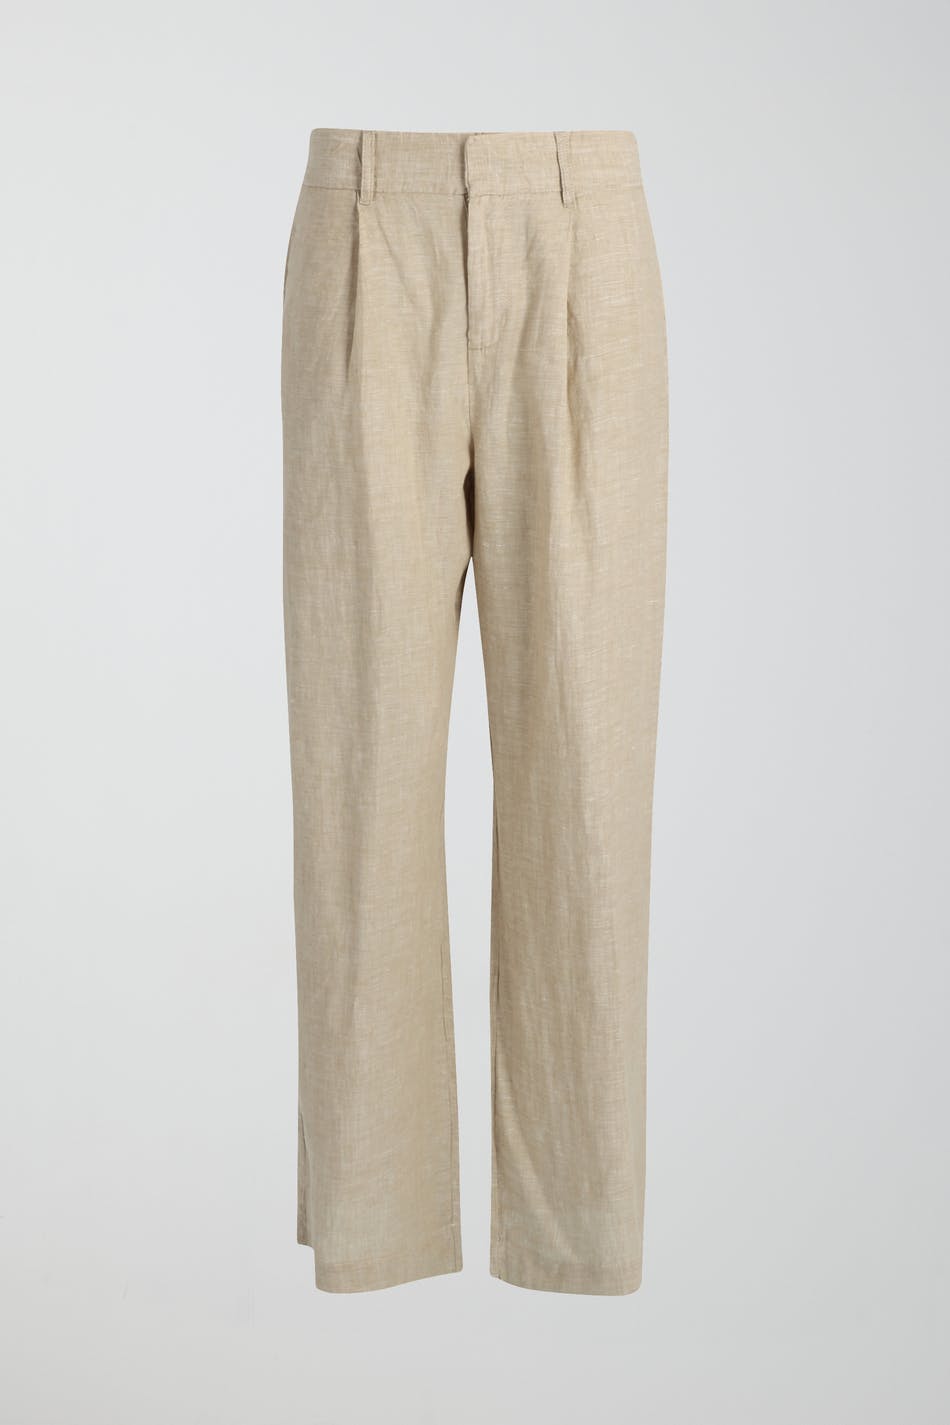 Denise tall linen trousers